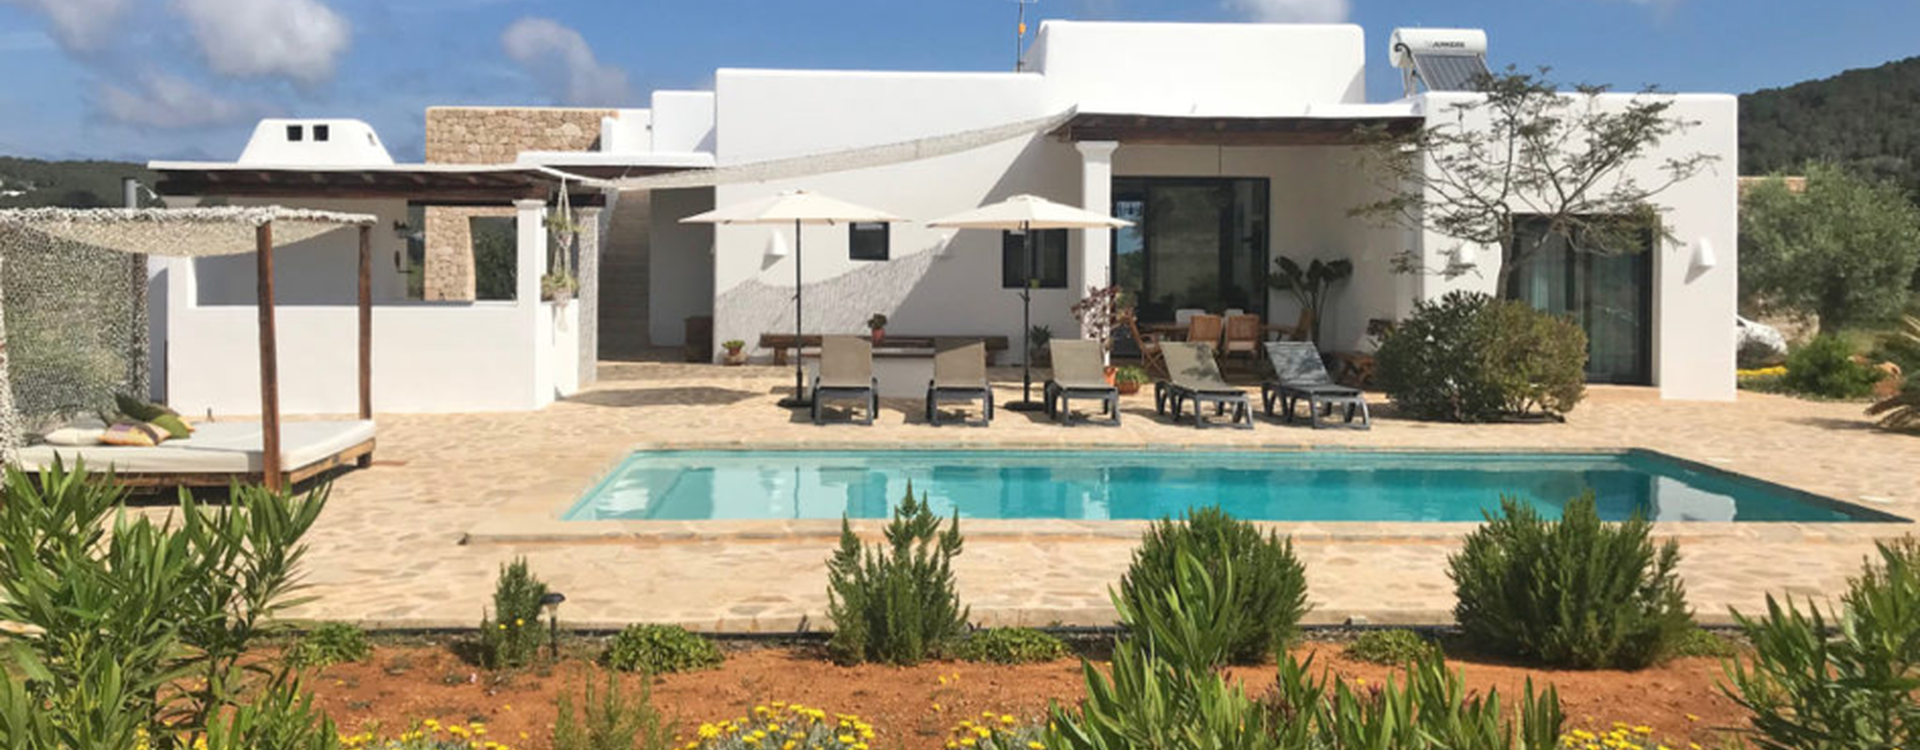 Villa Finca Gertrudis te huur op Ibiza - Tuin